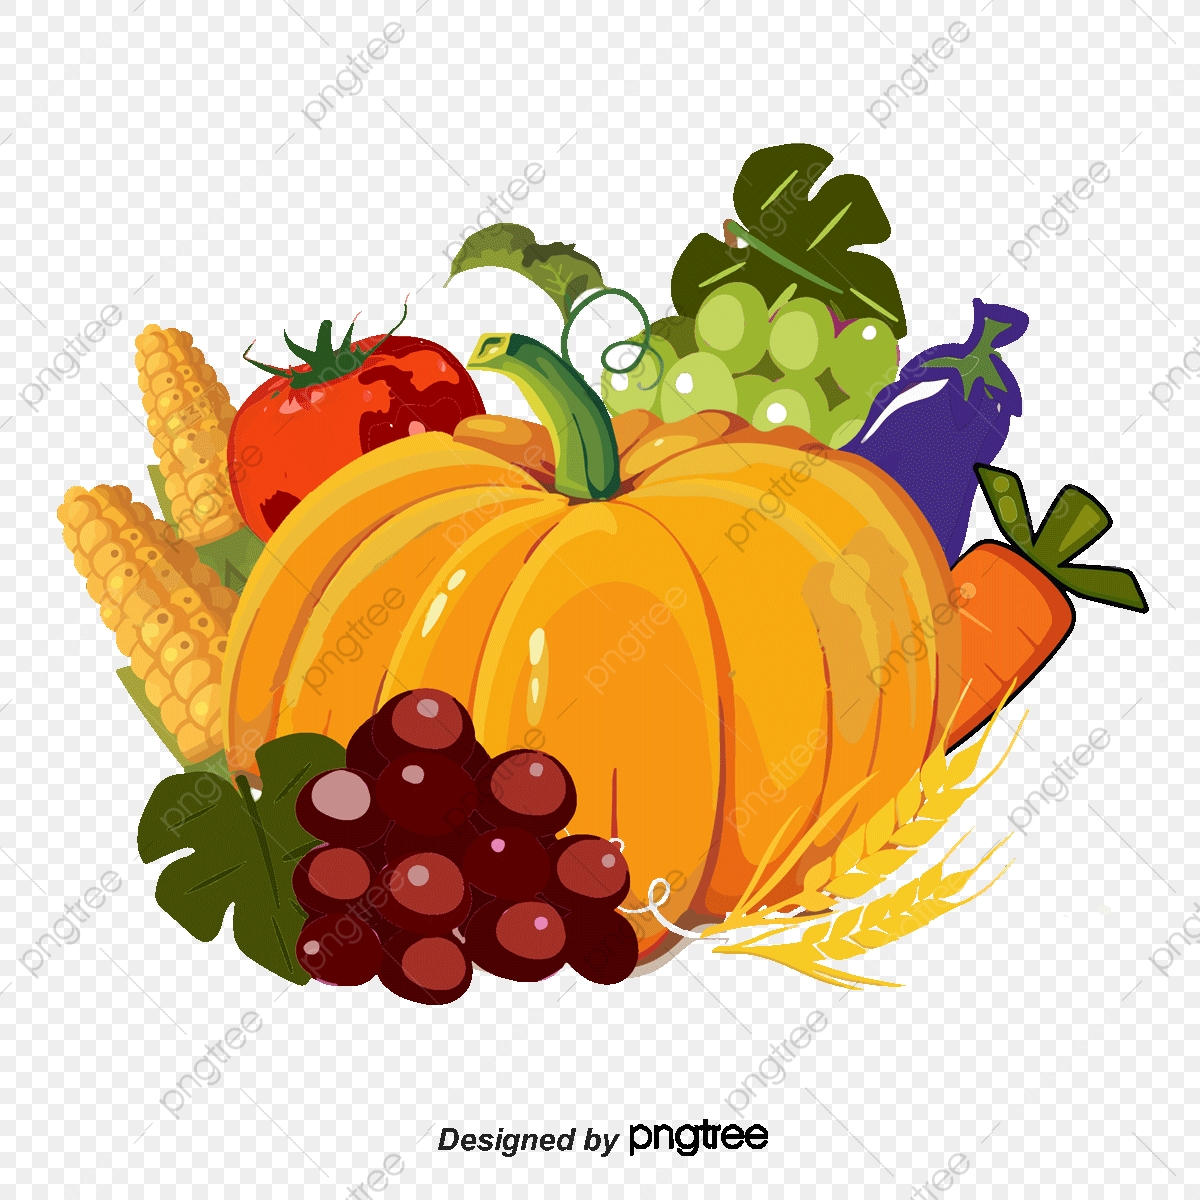 Harvest Fruits And Vegetables Food, Vegetables Clipart, Food Clipart.